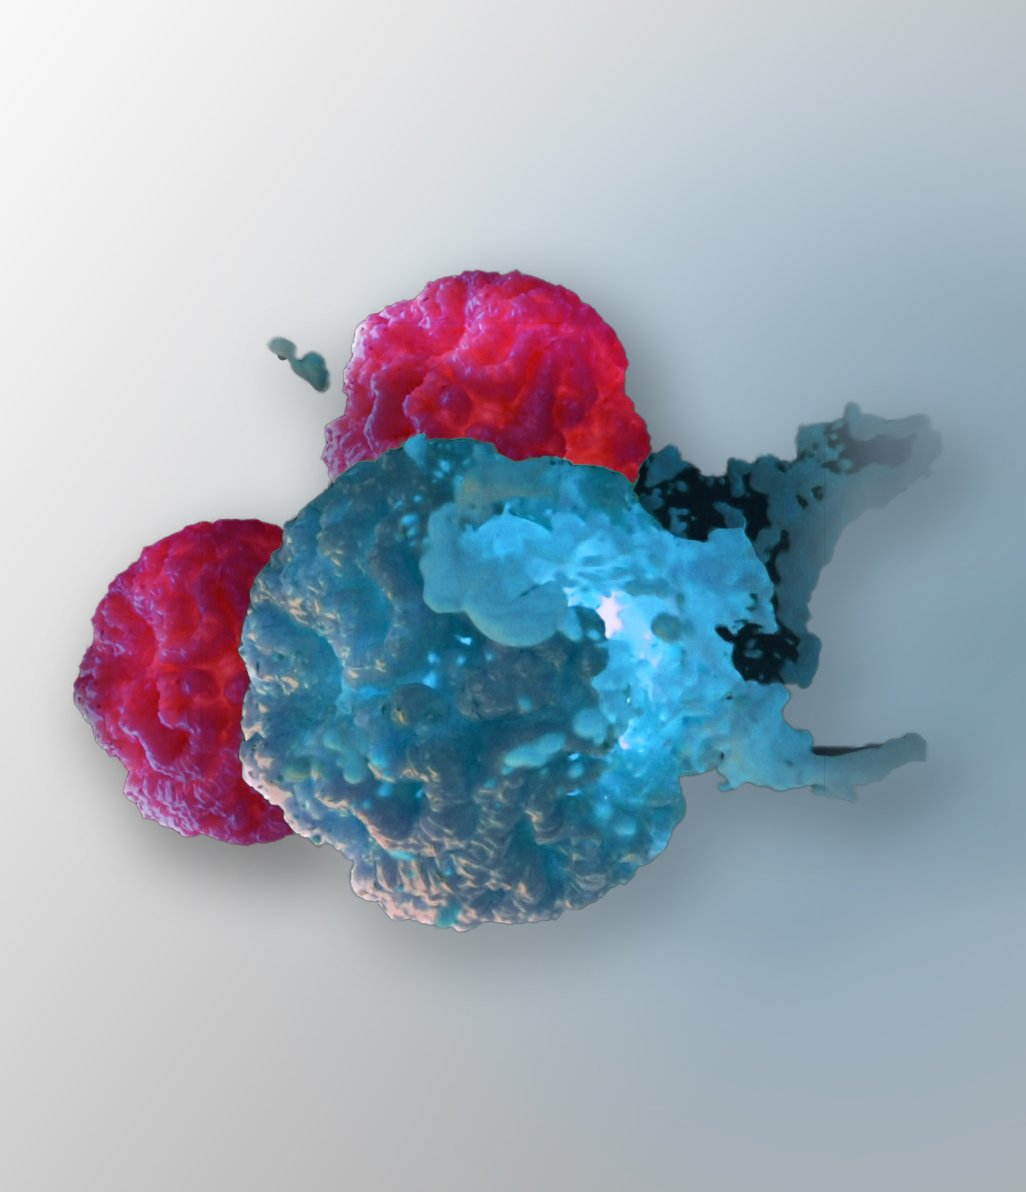 Immuno oncology imaging assays